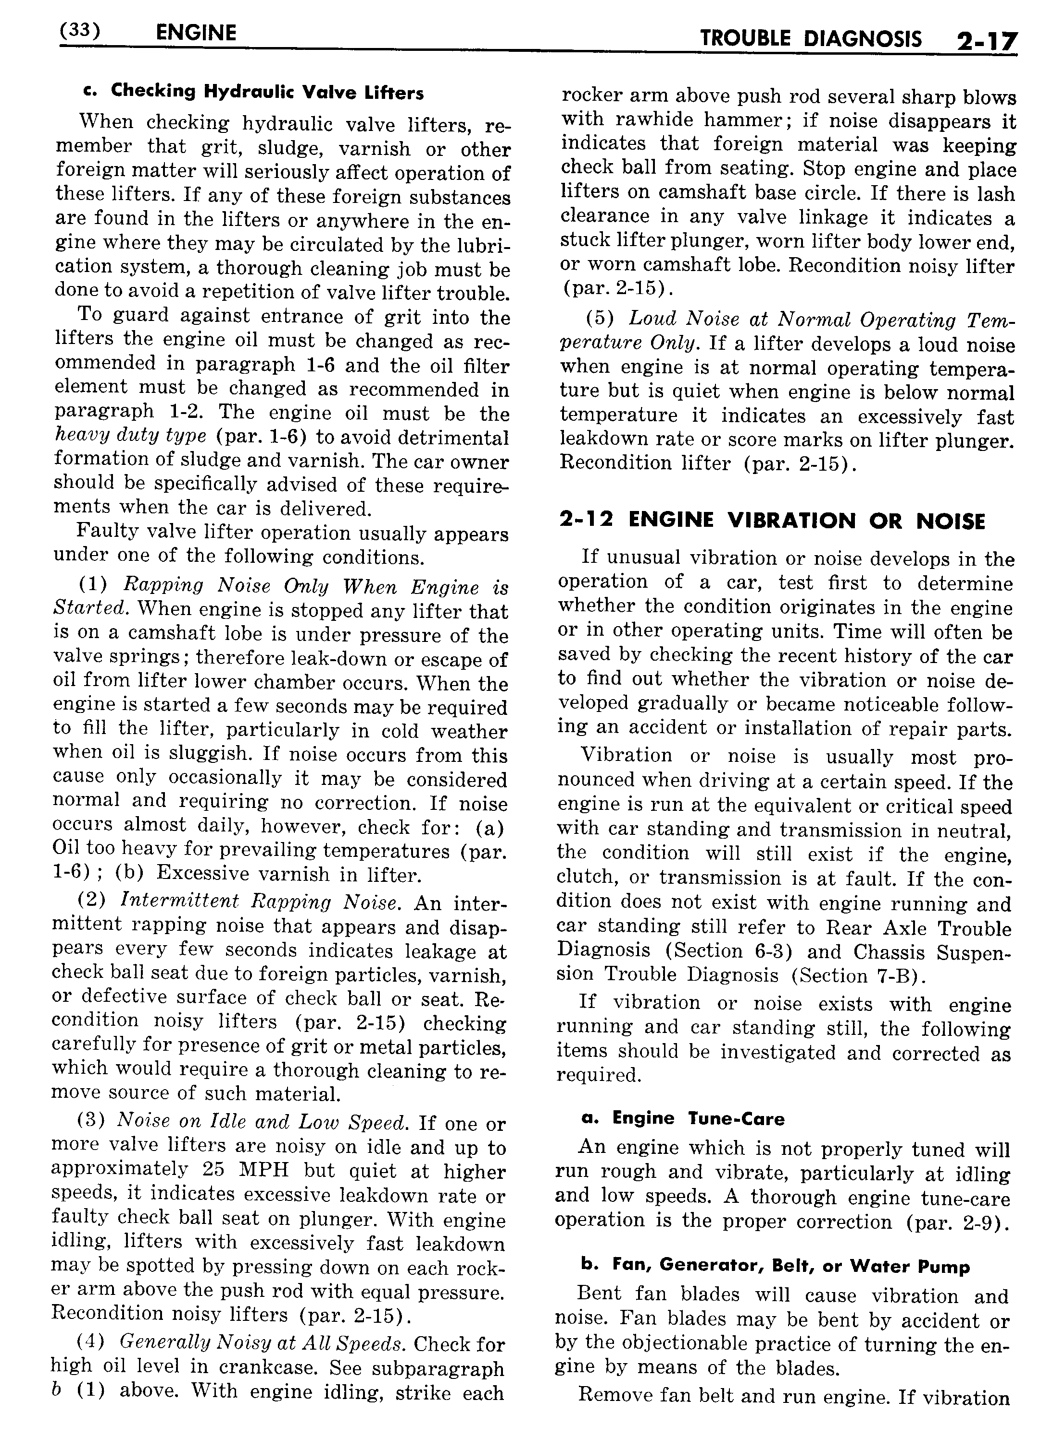 n_03 1956 Buick Shop Manual - Engine-017-017.jpg